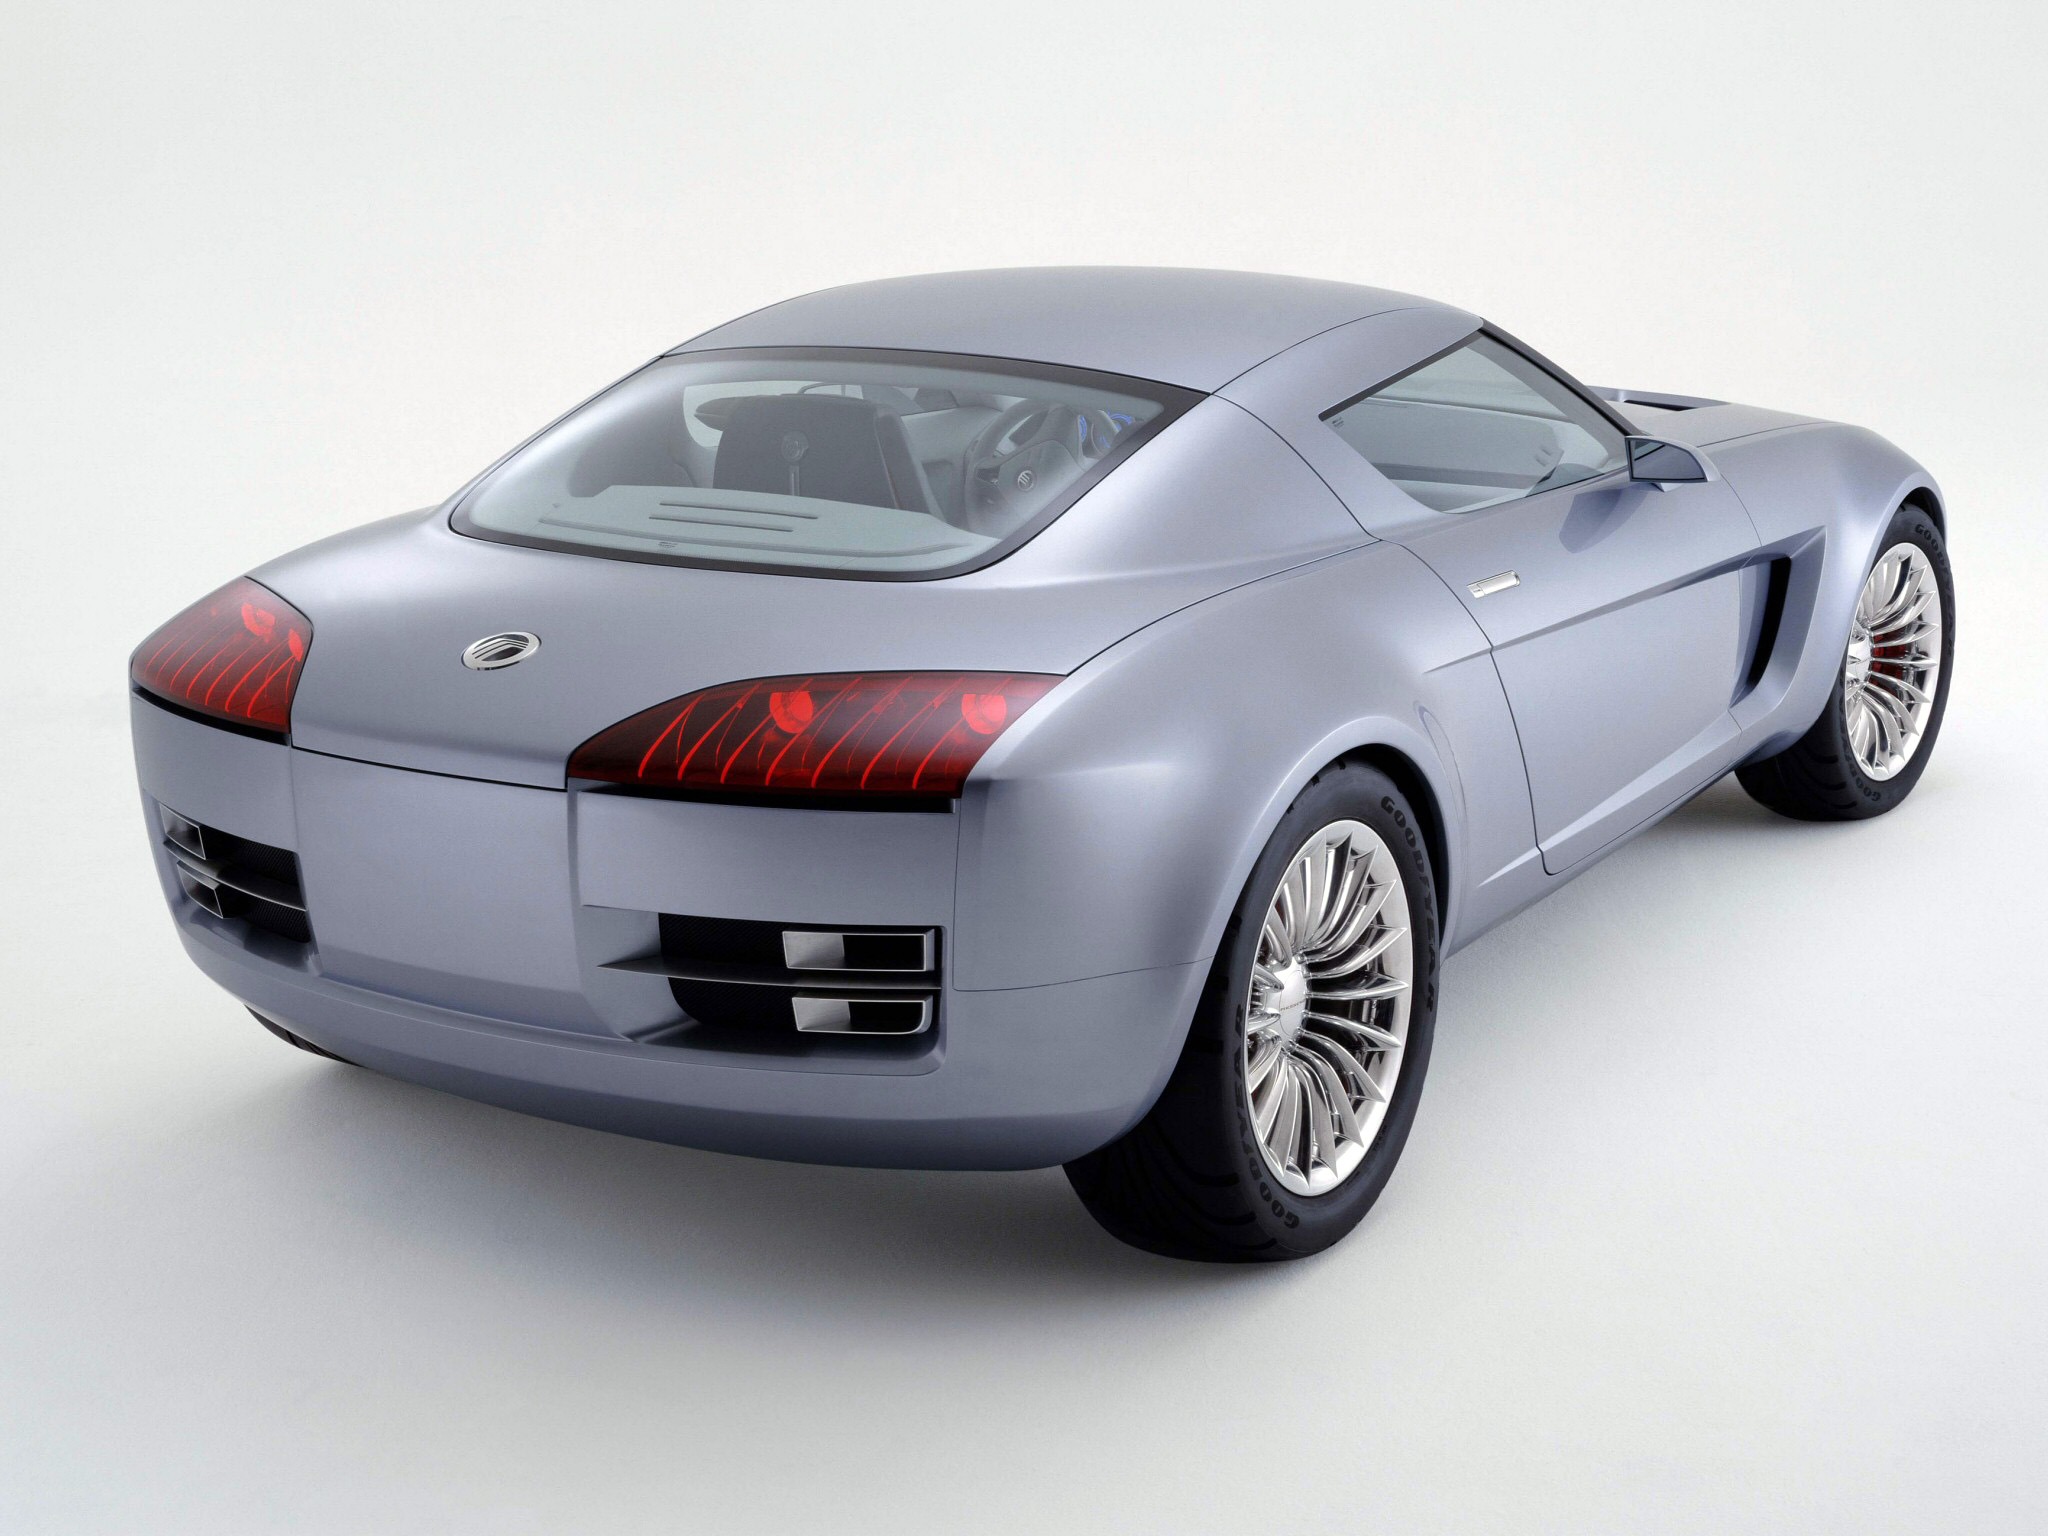 Mercury Messenger Concept (2003) - Old Concept Cars